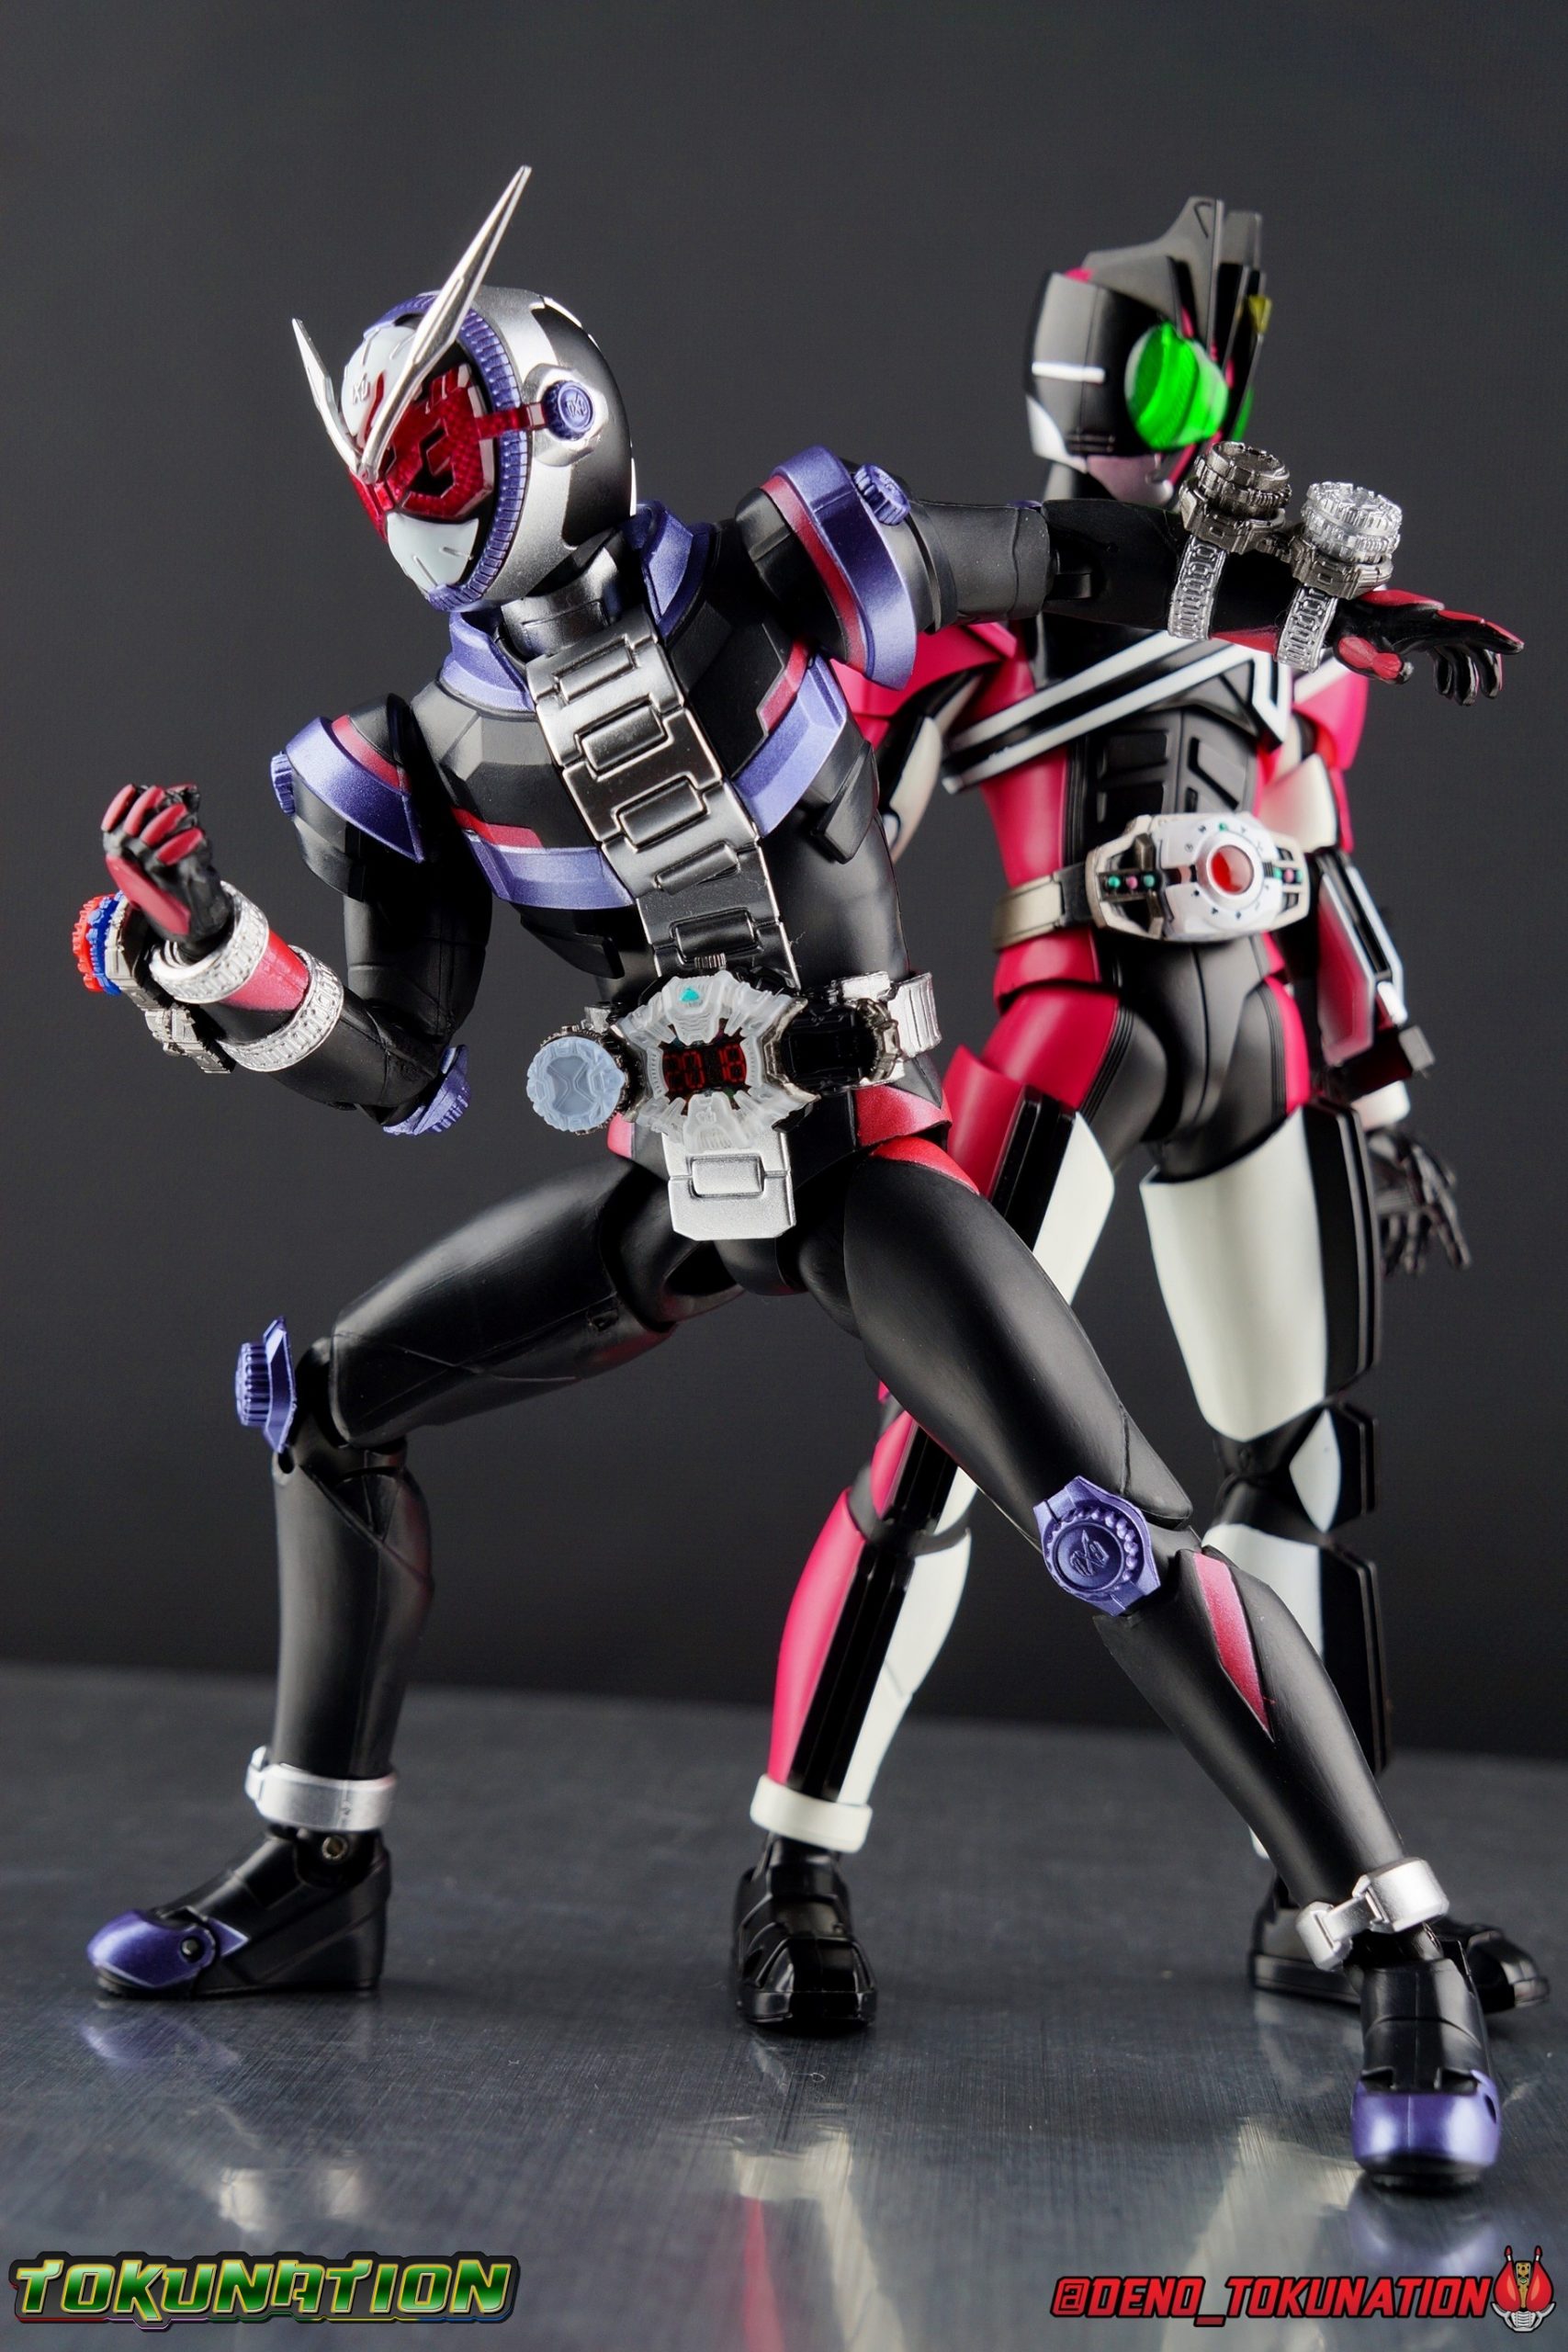 S.h. Figuarts Kamen Rider Zi-O Gallery &amp; Review - Tokunation à Kamen Rider Zi-O